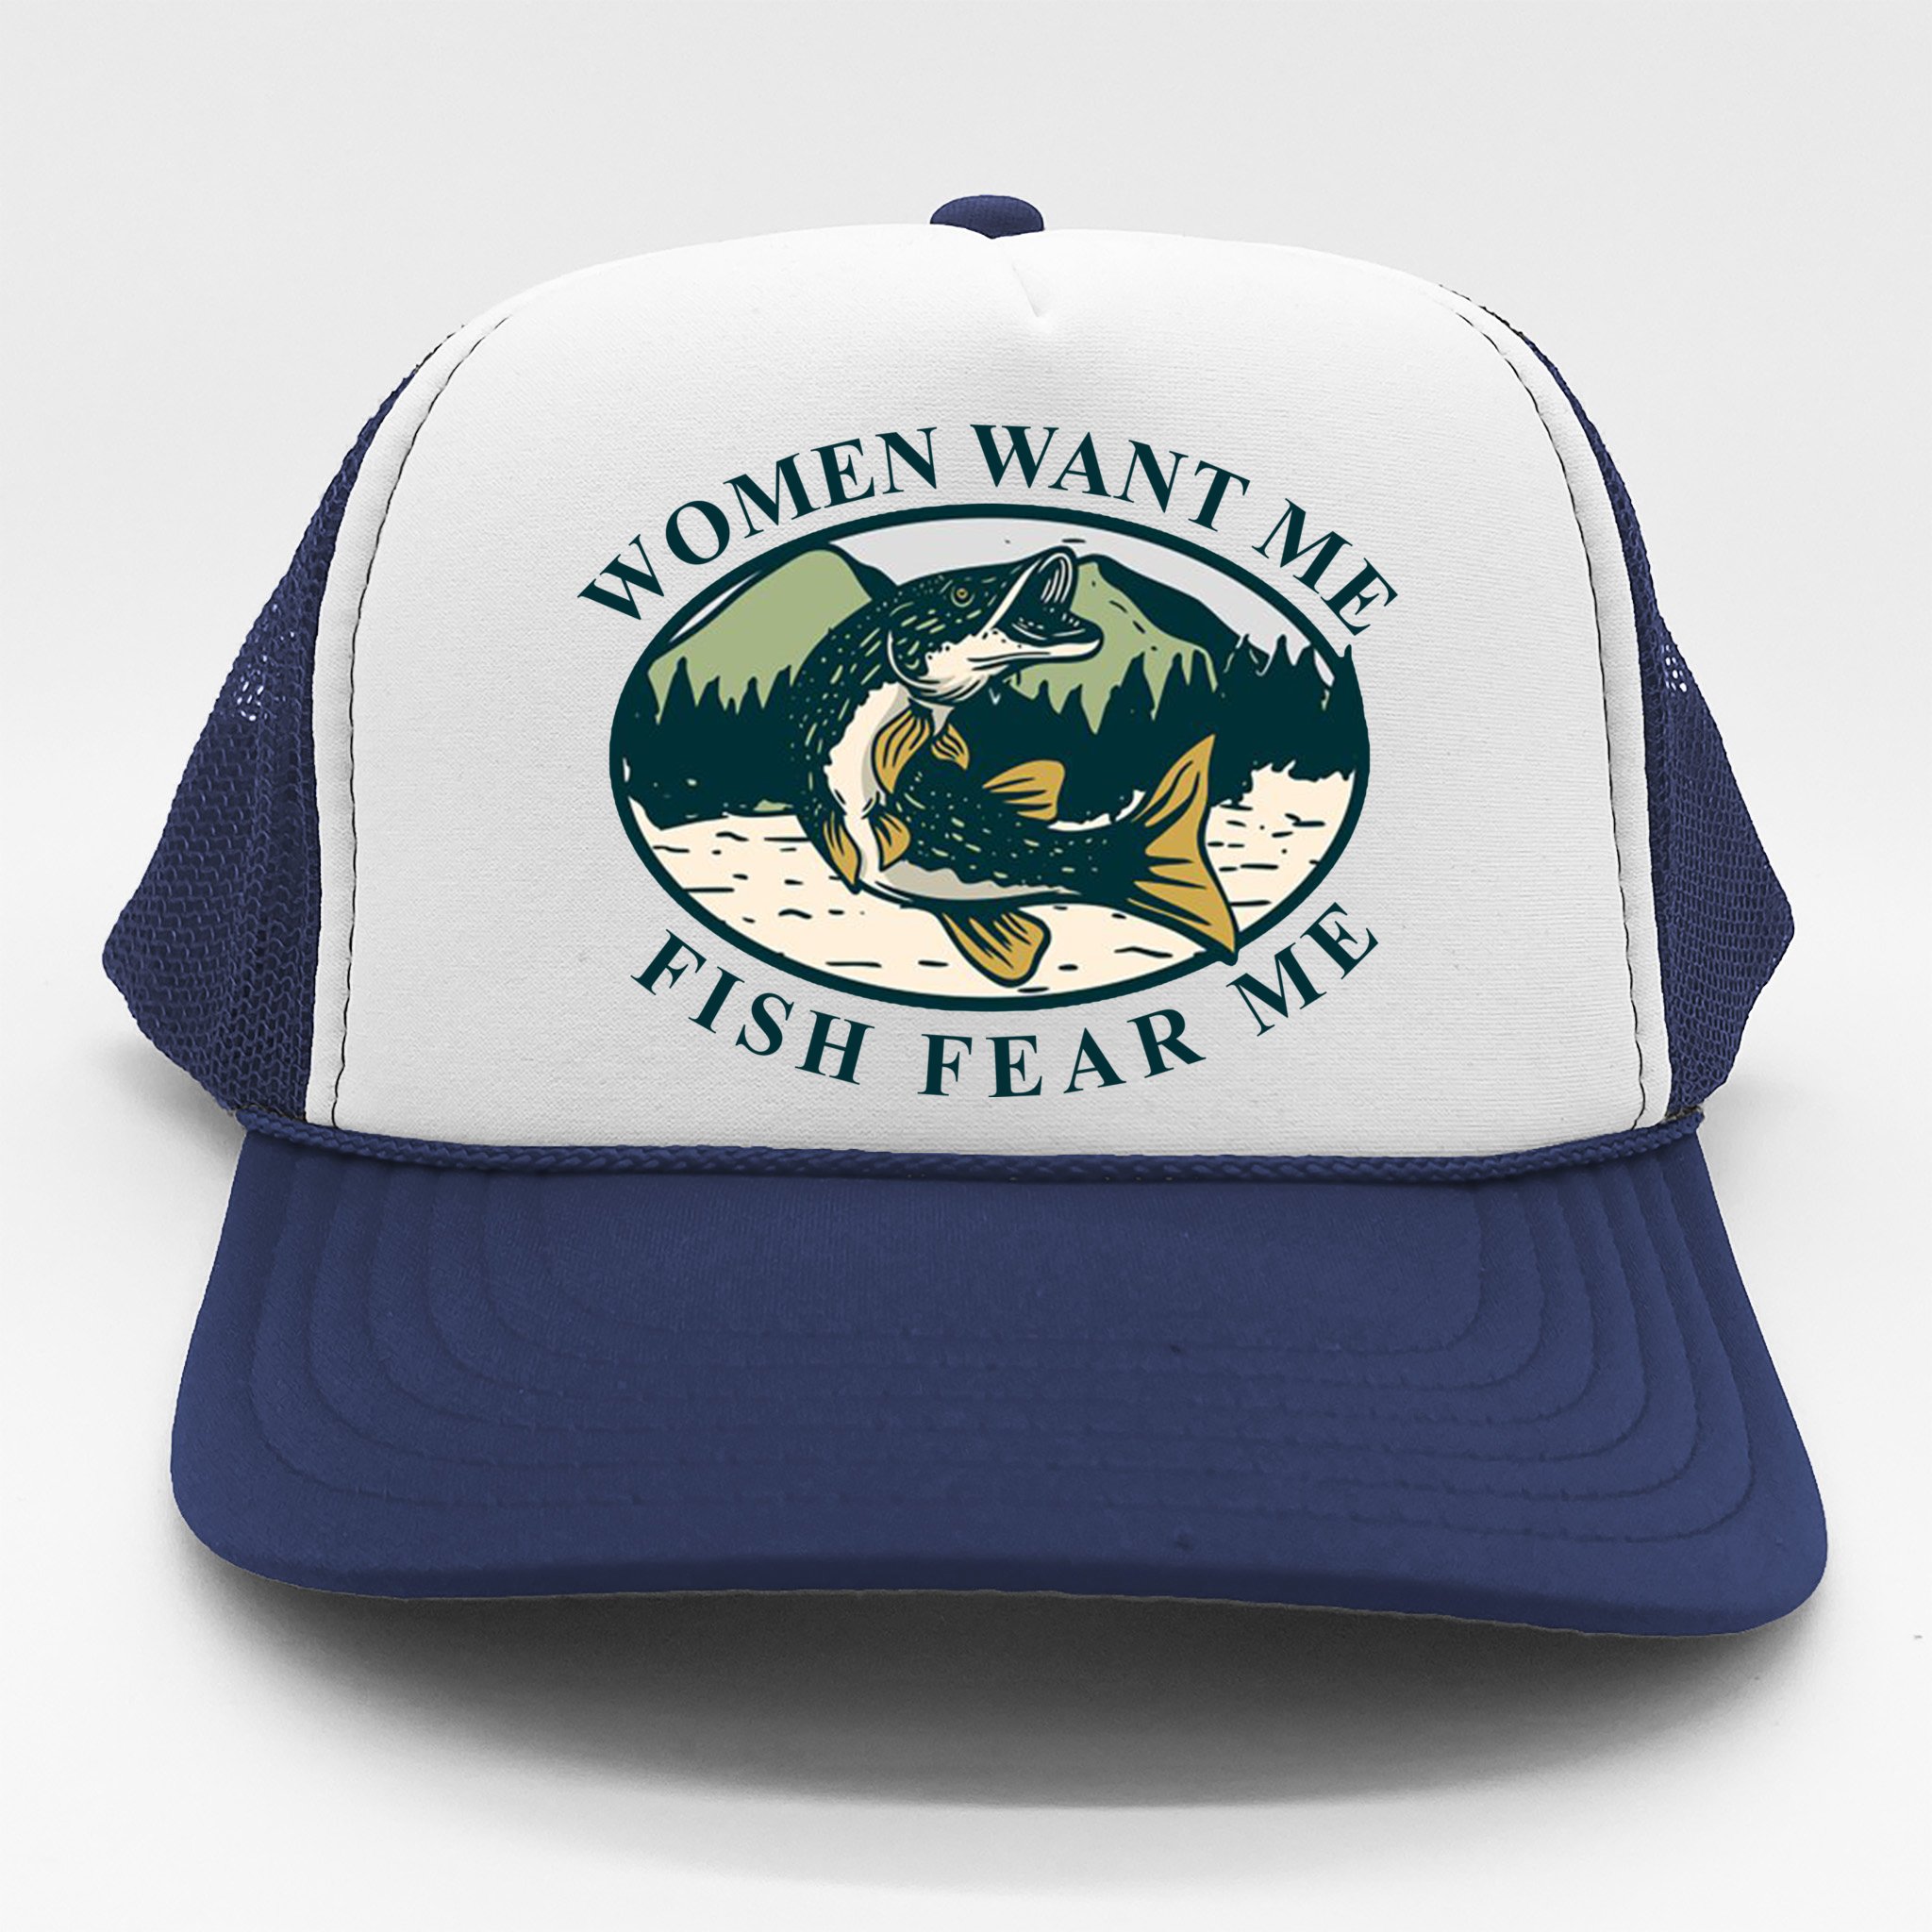 Women Want Me Fish Fear Me Funny Fishing Gift Trucker Hat